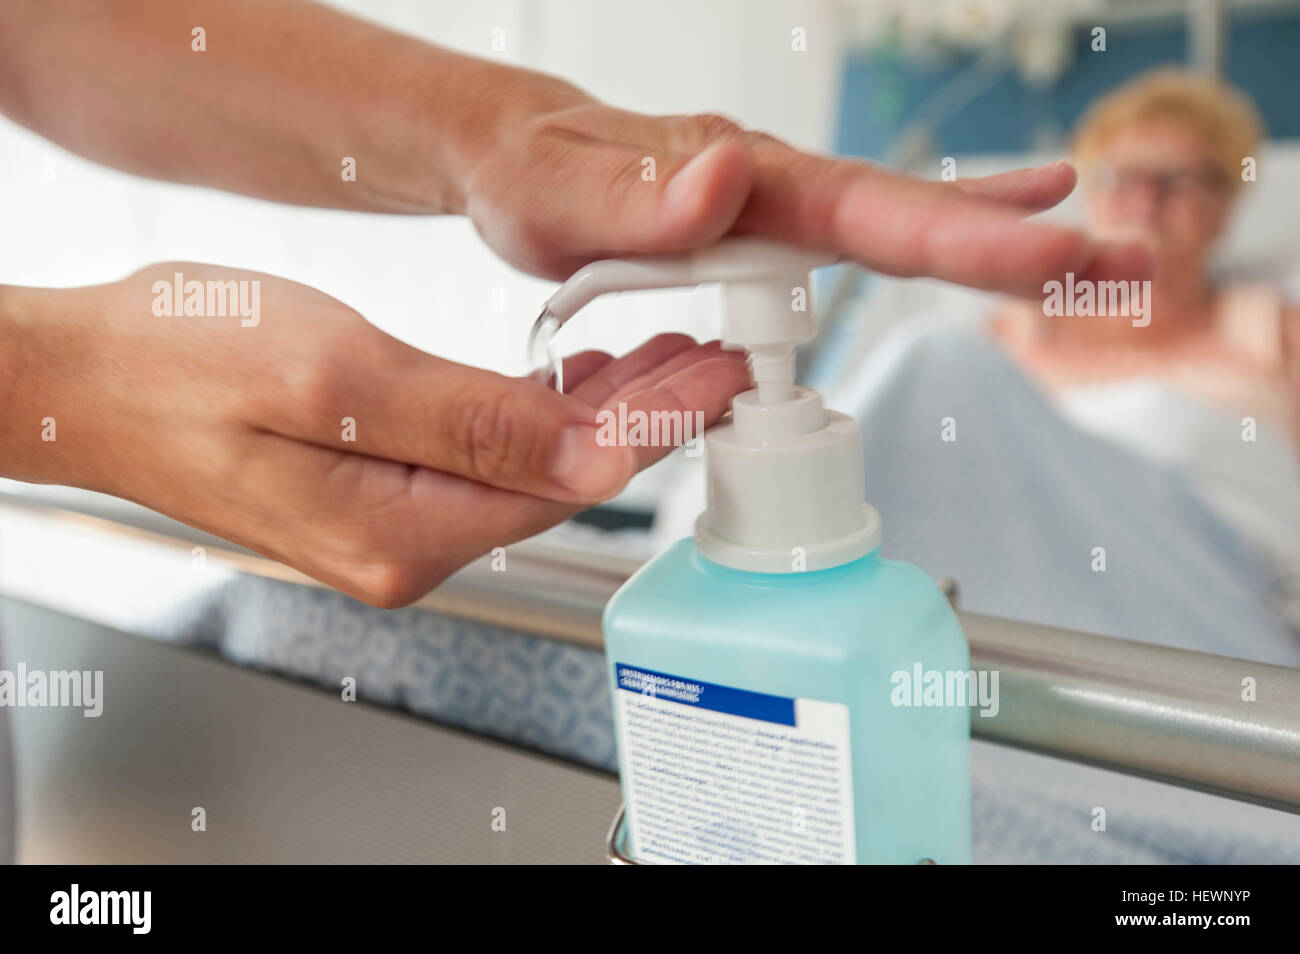 Nurse using hand sanitiser on hospital bed Stock Photo - Alamy